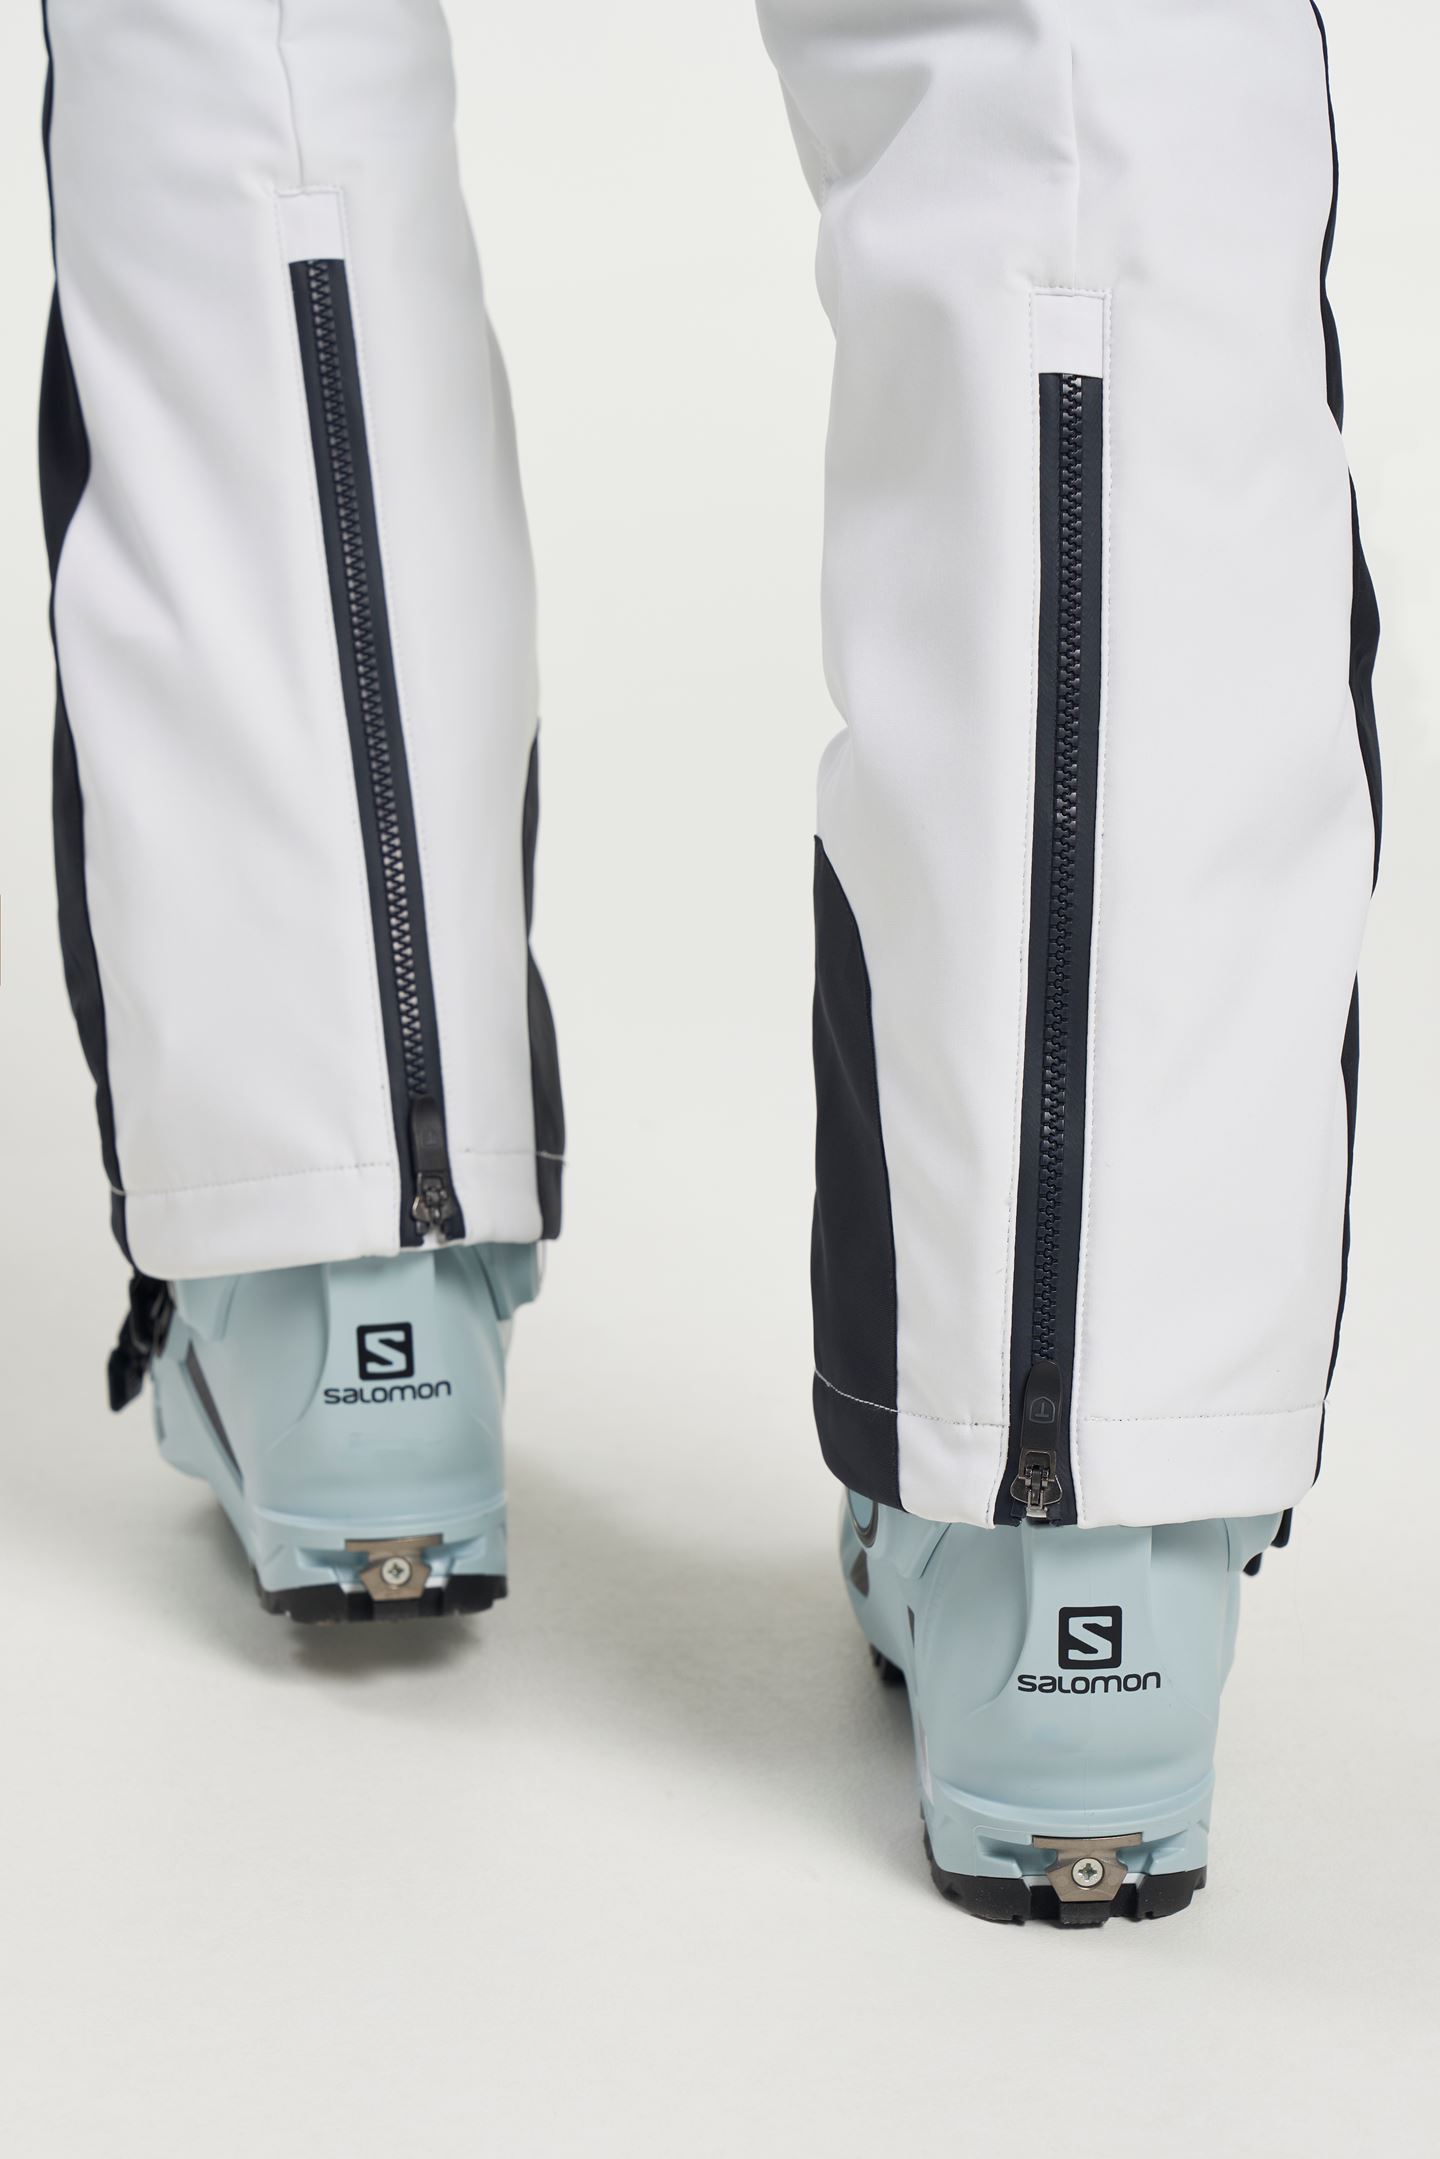 Softshell Ski Pants - Women's Stretch Ski Pants - White